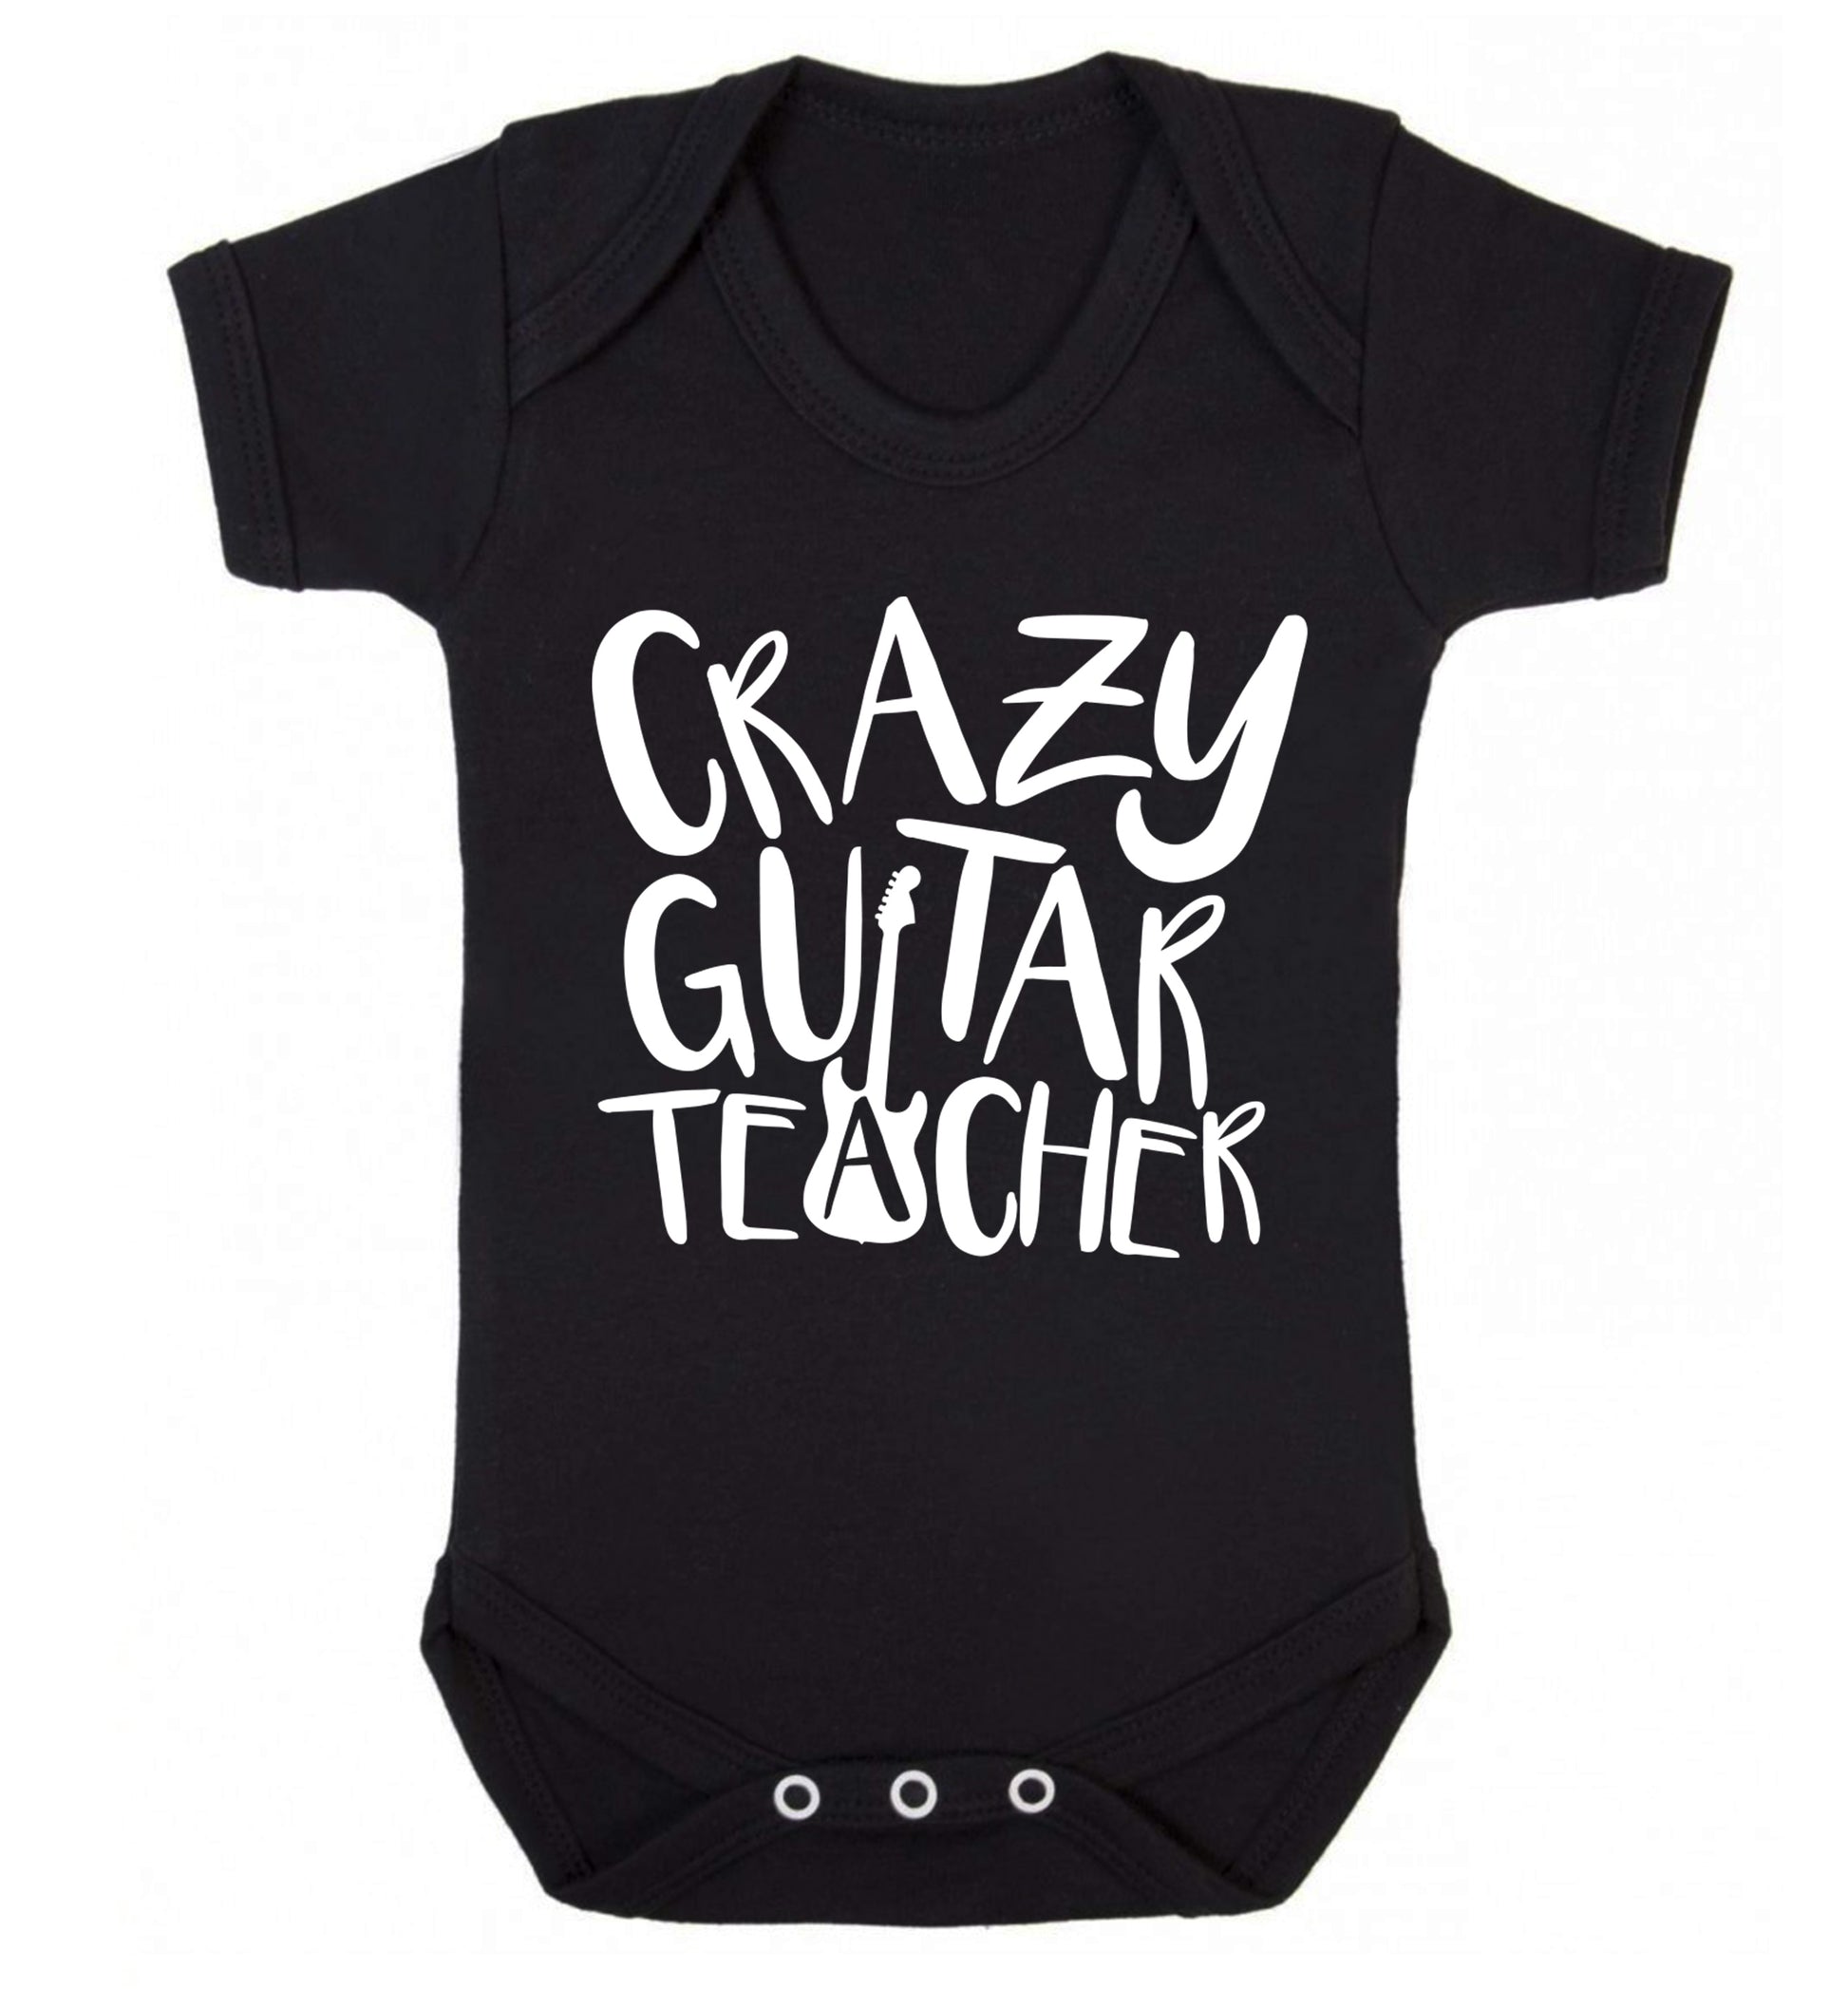 Crazy guitar teacher Baby Vest black 18-24 months